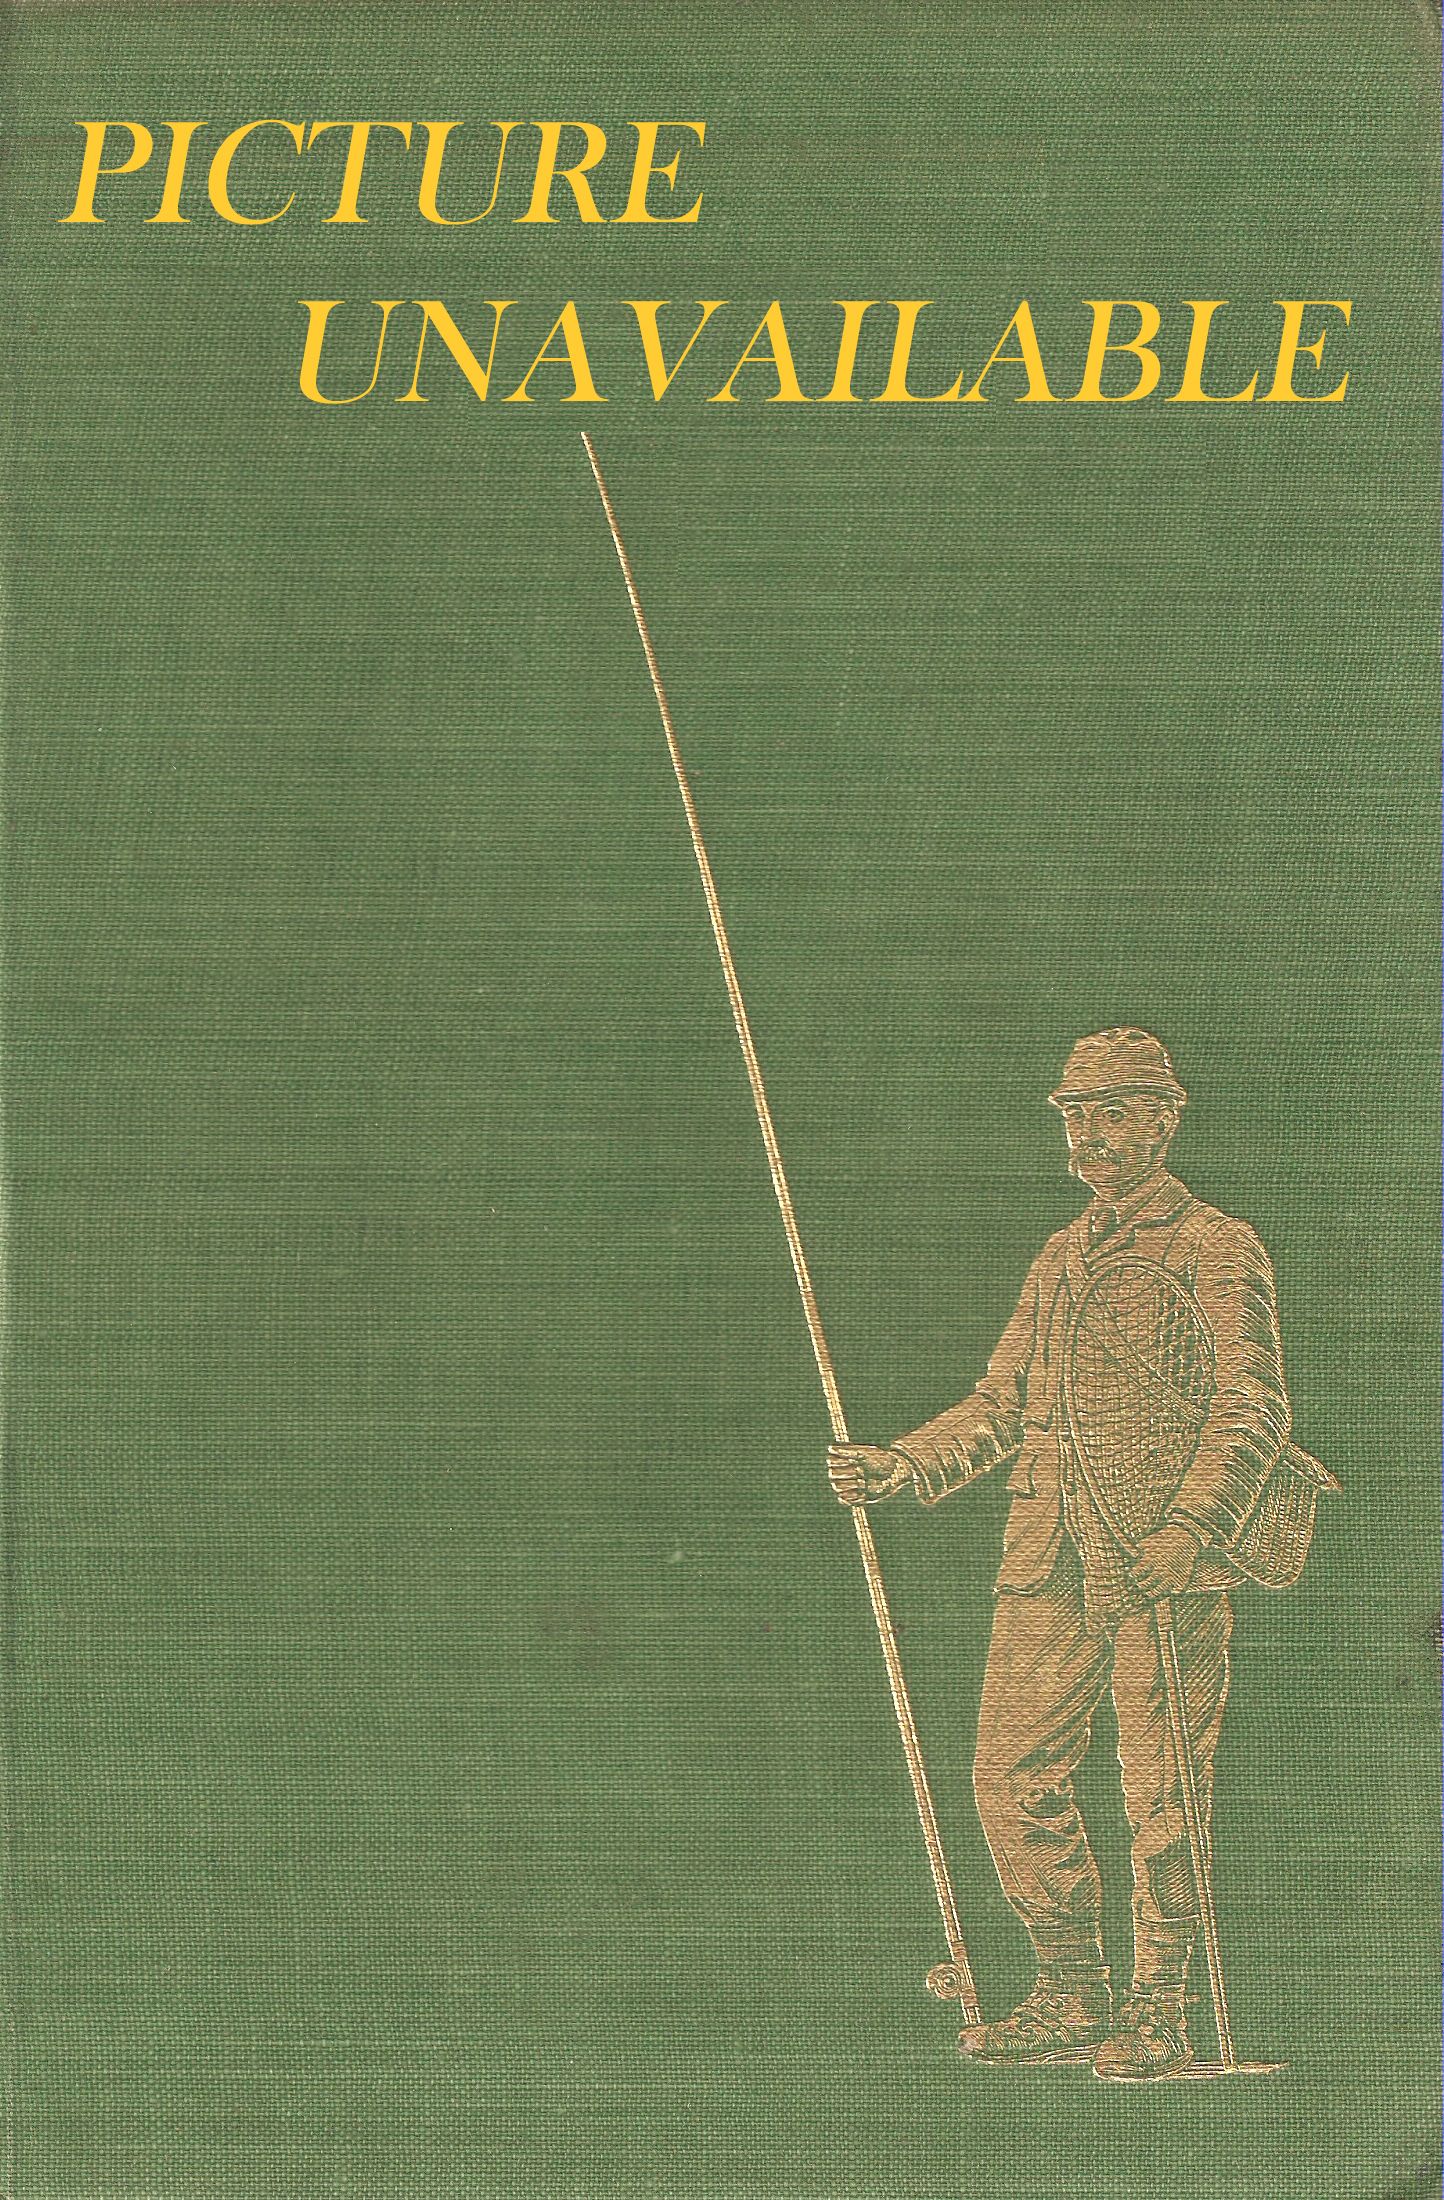 CREEL: A FISHING MAGAZINE. Volume 1, number 7. January 1964.